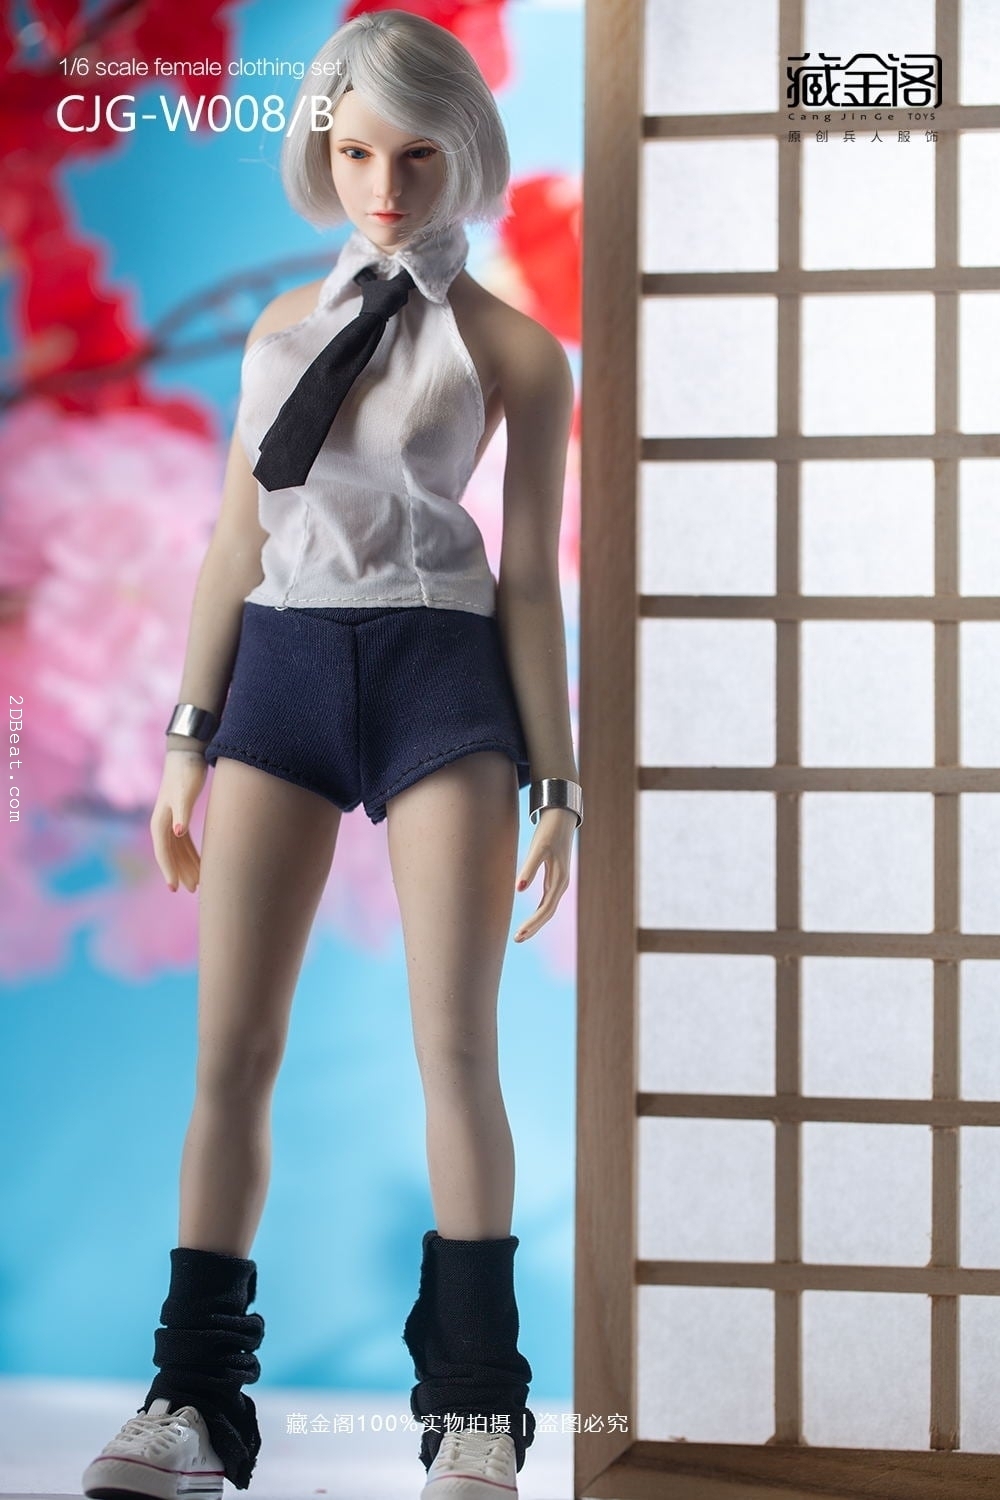 Female Clothes CJG-W008 Uniform Girl 1/6 Scale * 2DBeat Hobby Store